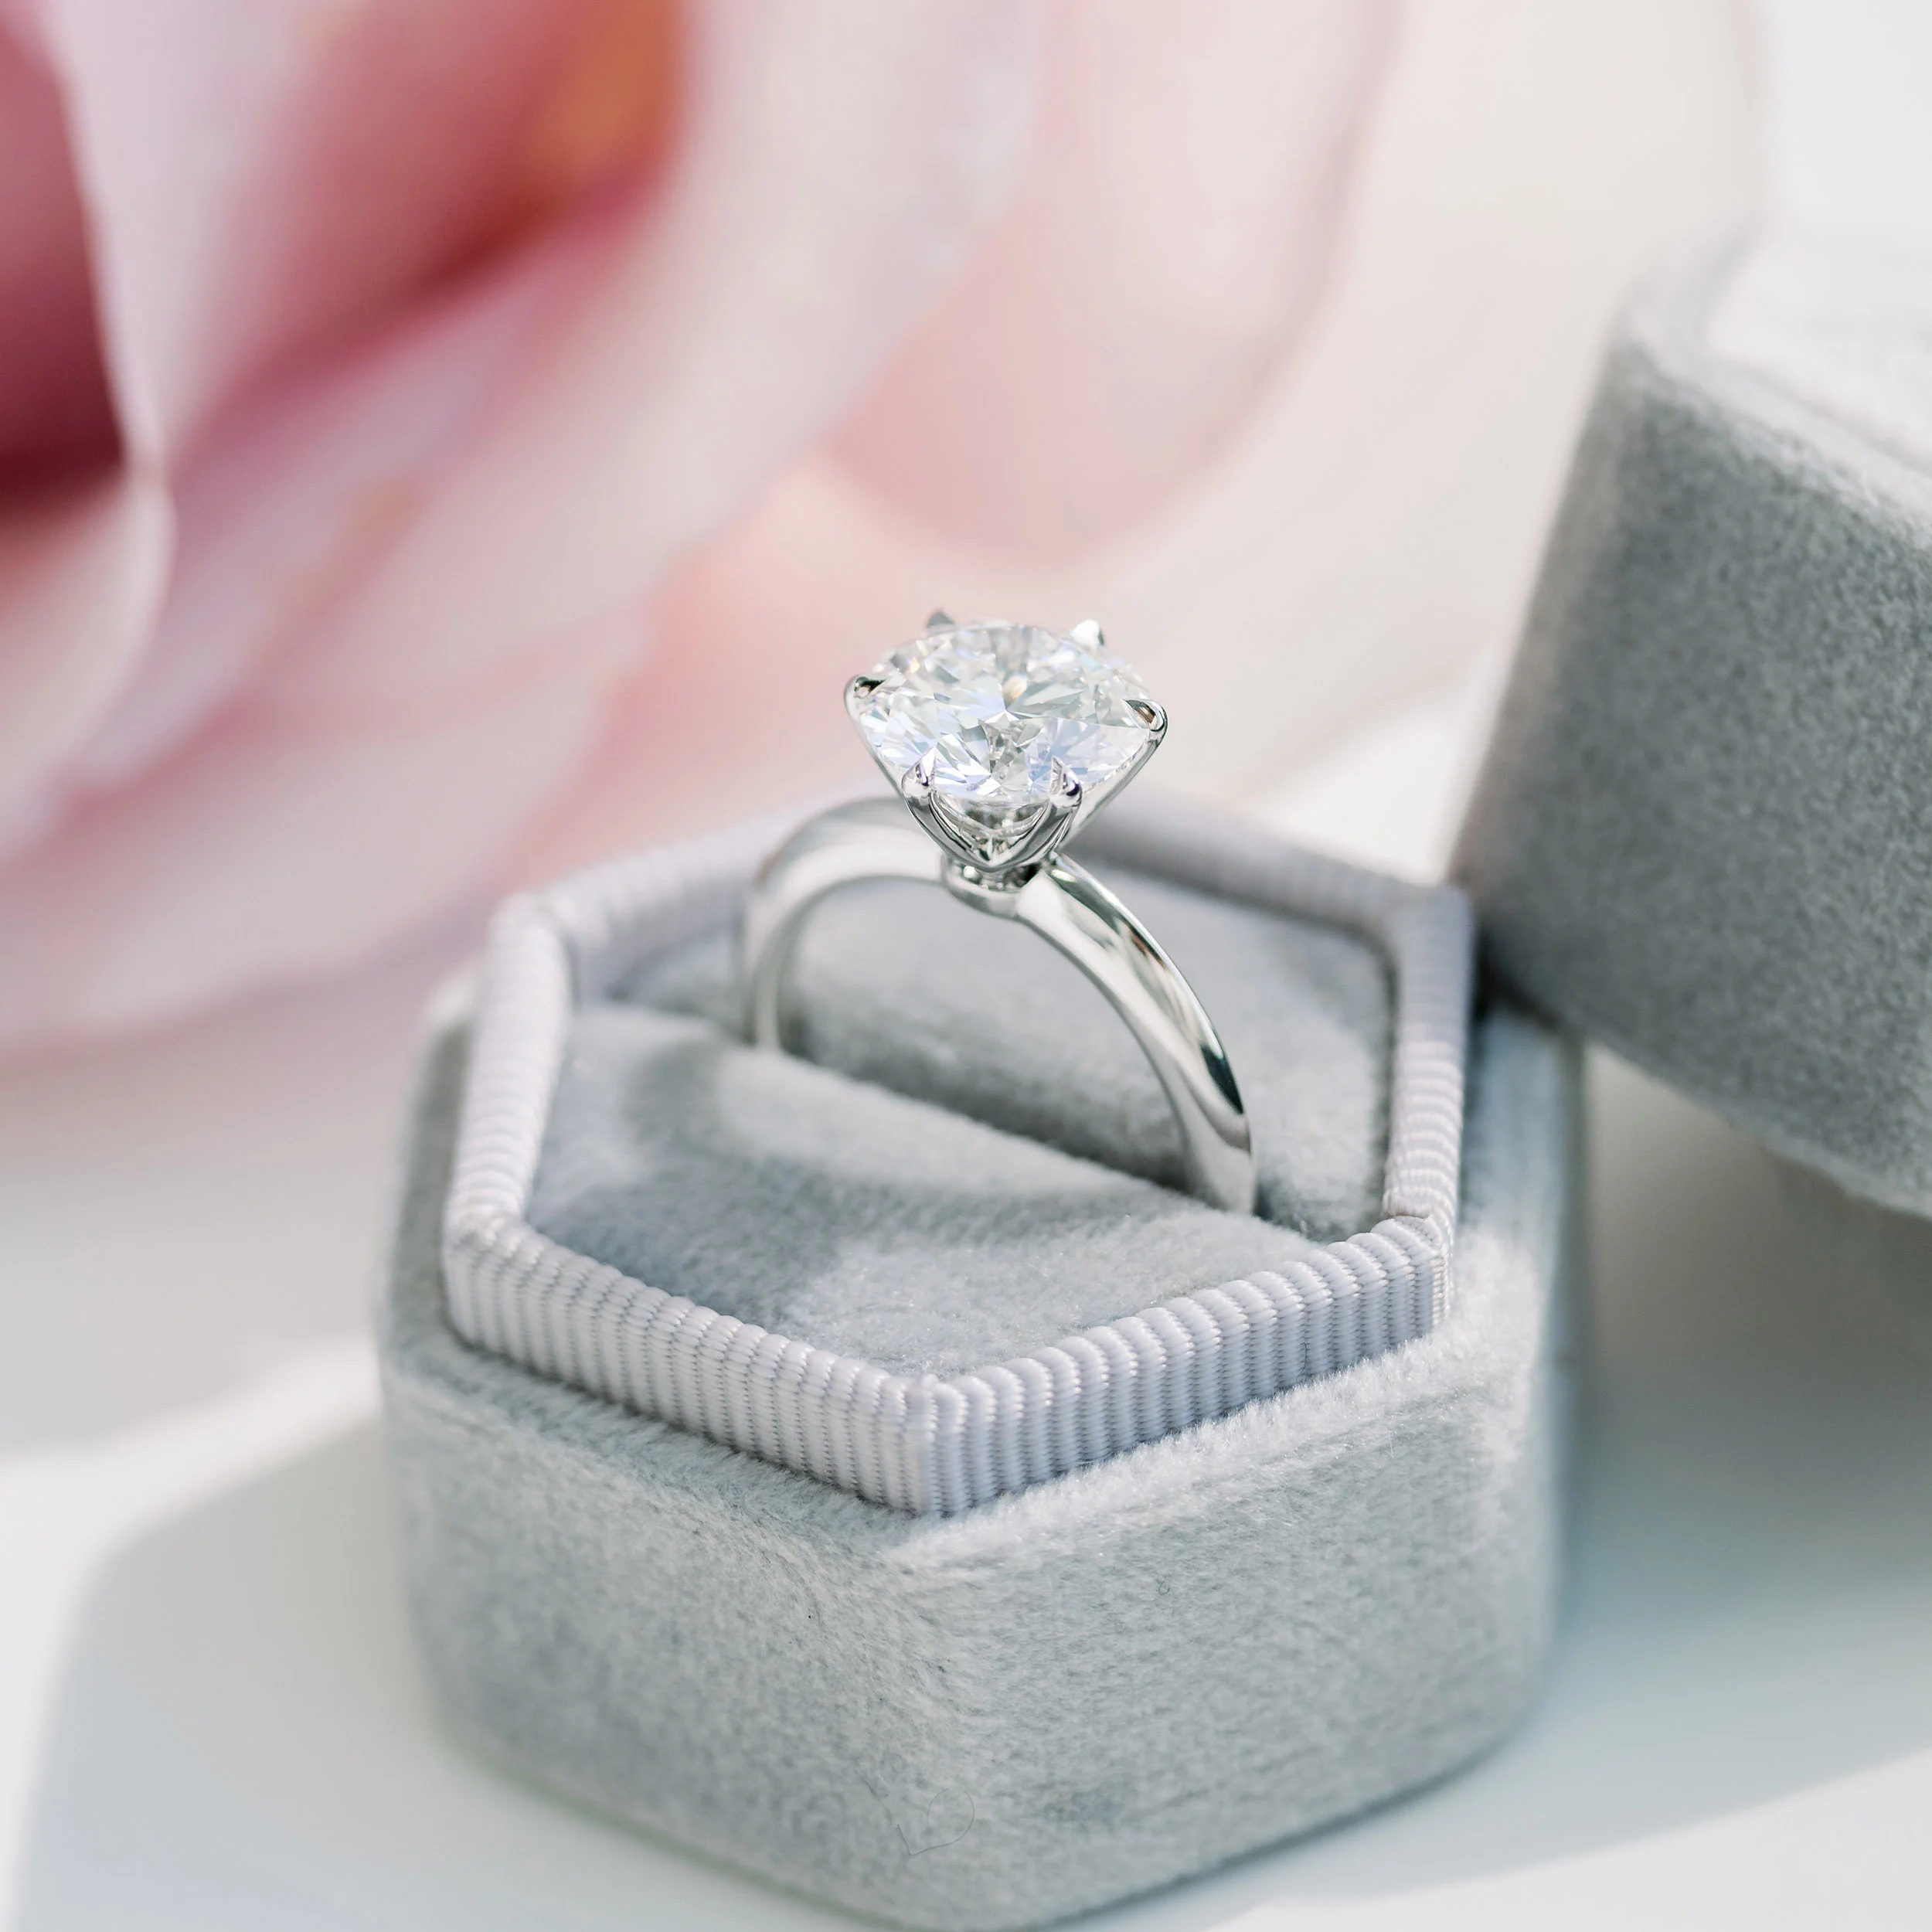 3.0 Carat Diamonds set in Platinum Round Classic Six Prong Solitaire Diamond Engagement Ring (Profile View)